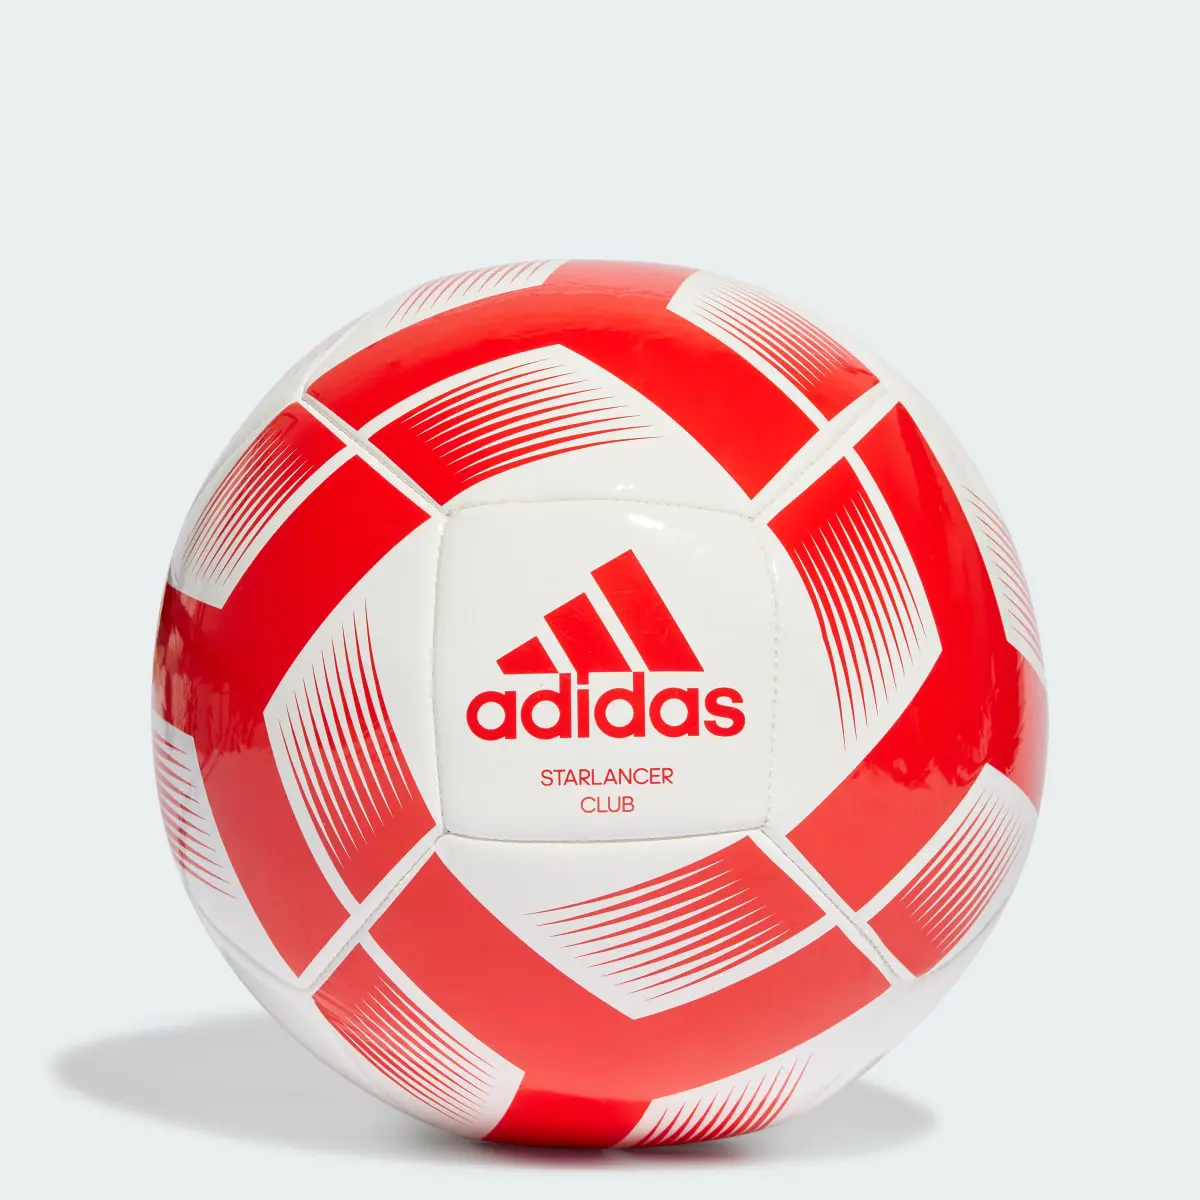 Adidas Starlancer Club Football. 1